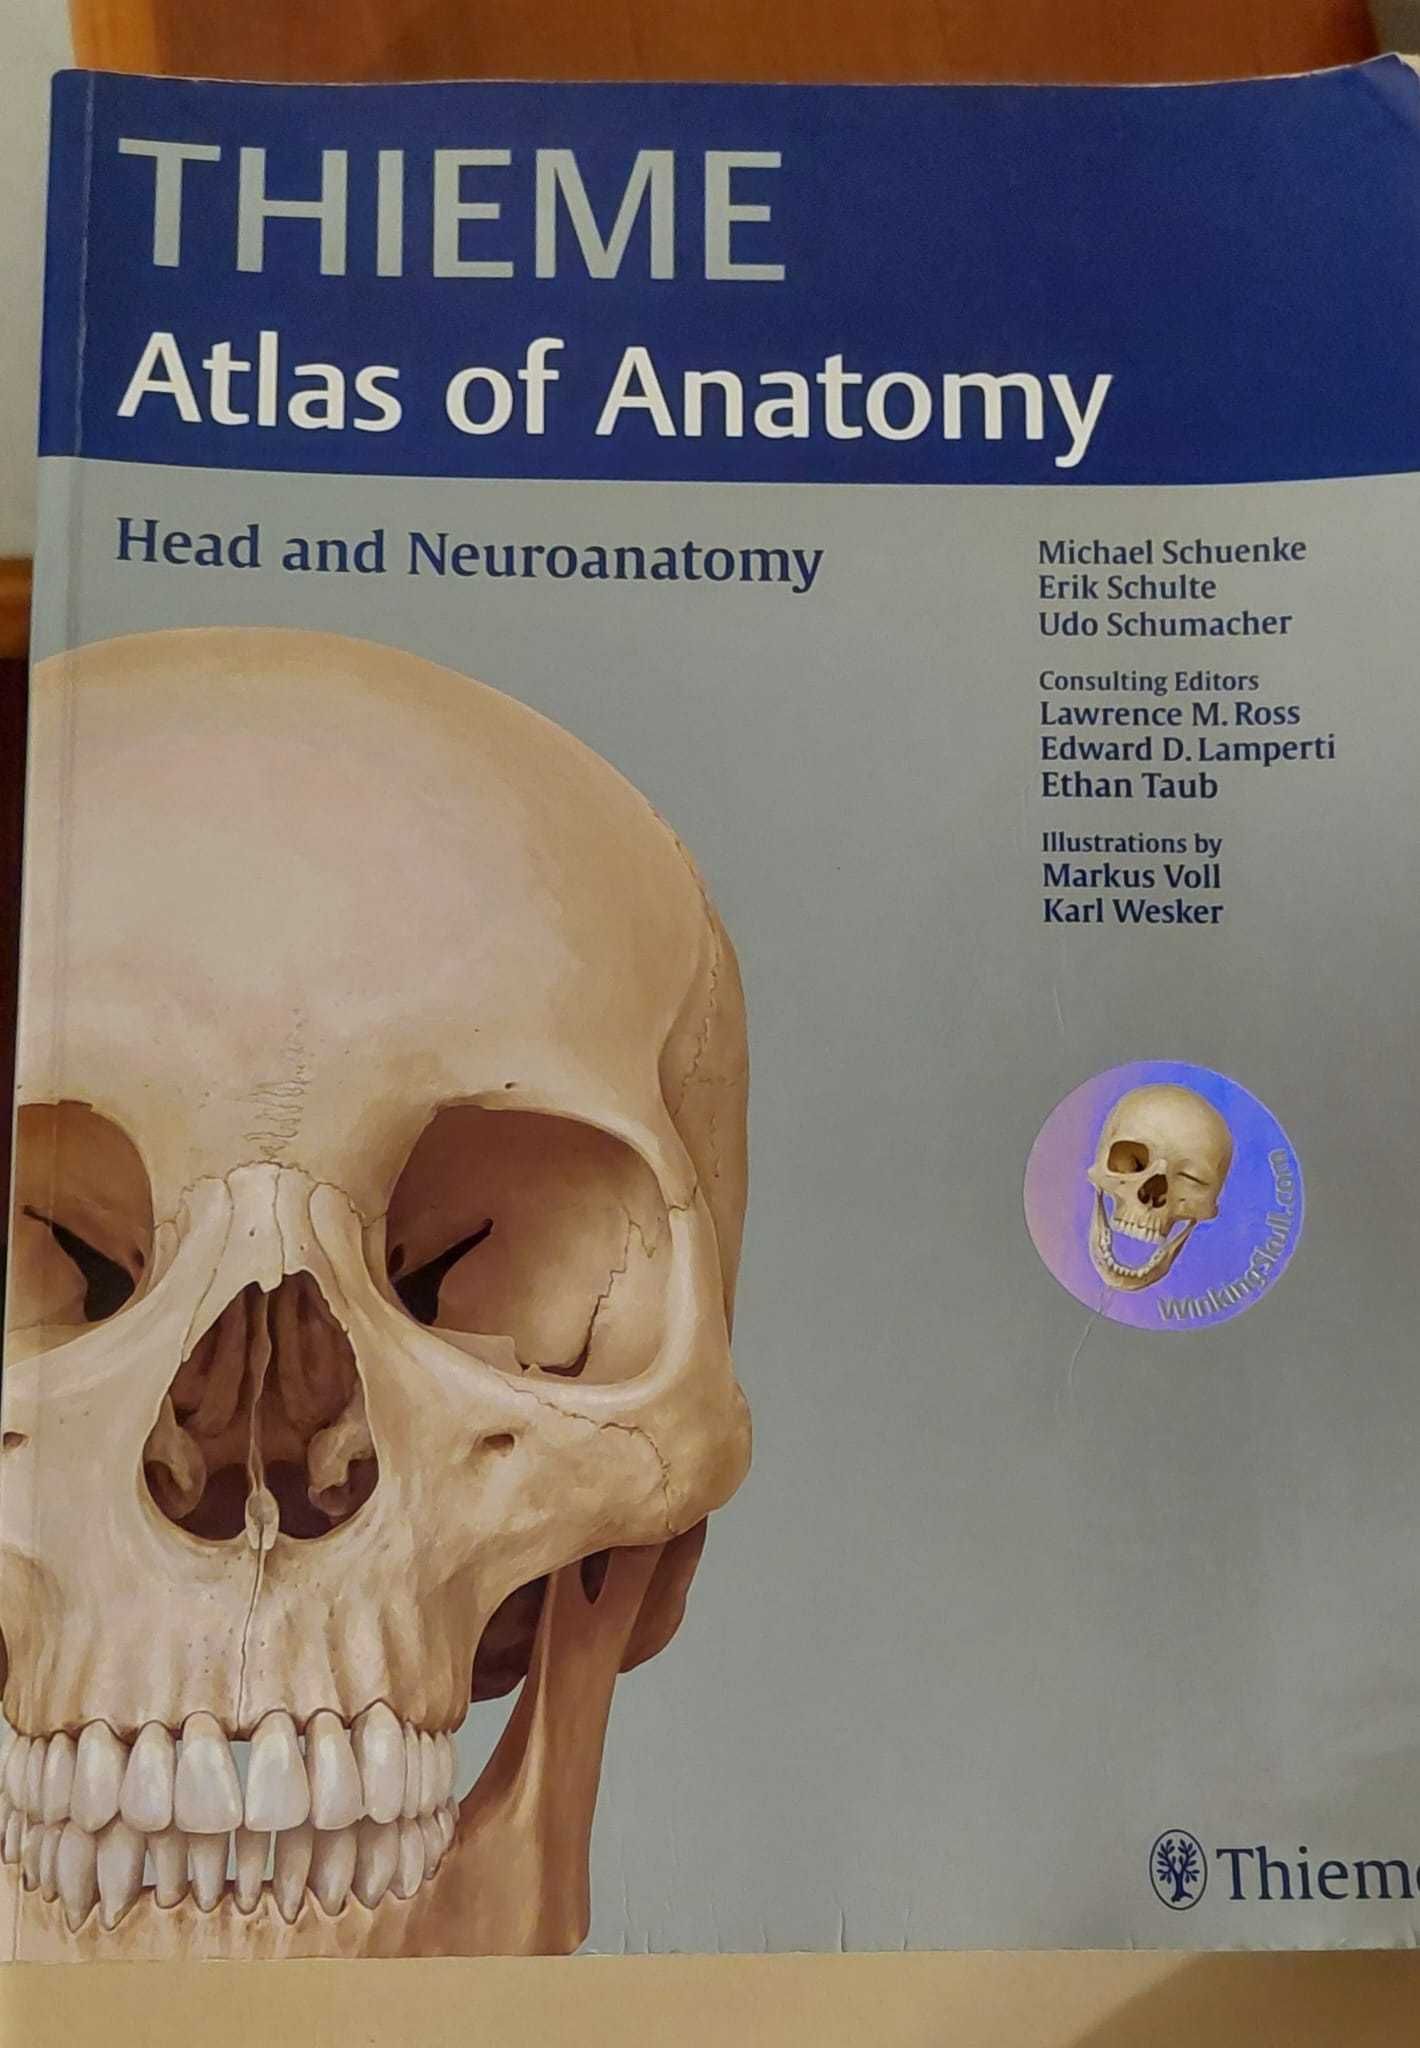 Thieme Atlas of Anatomy: Head and Neuroanatomy, 1st edition